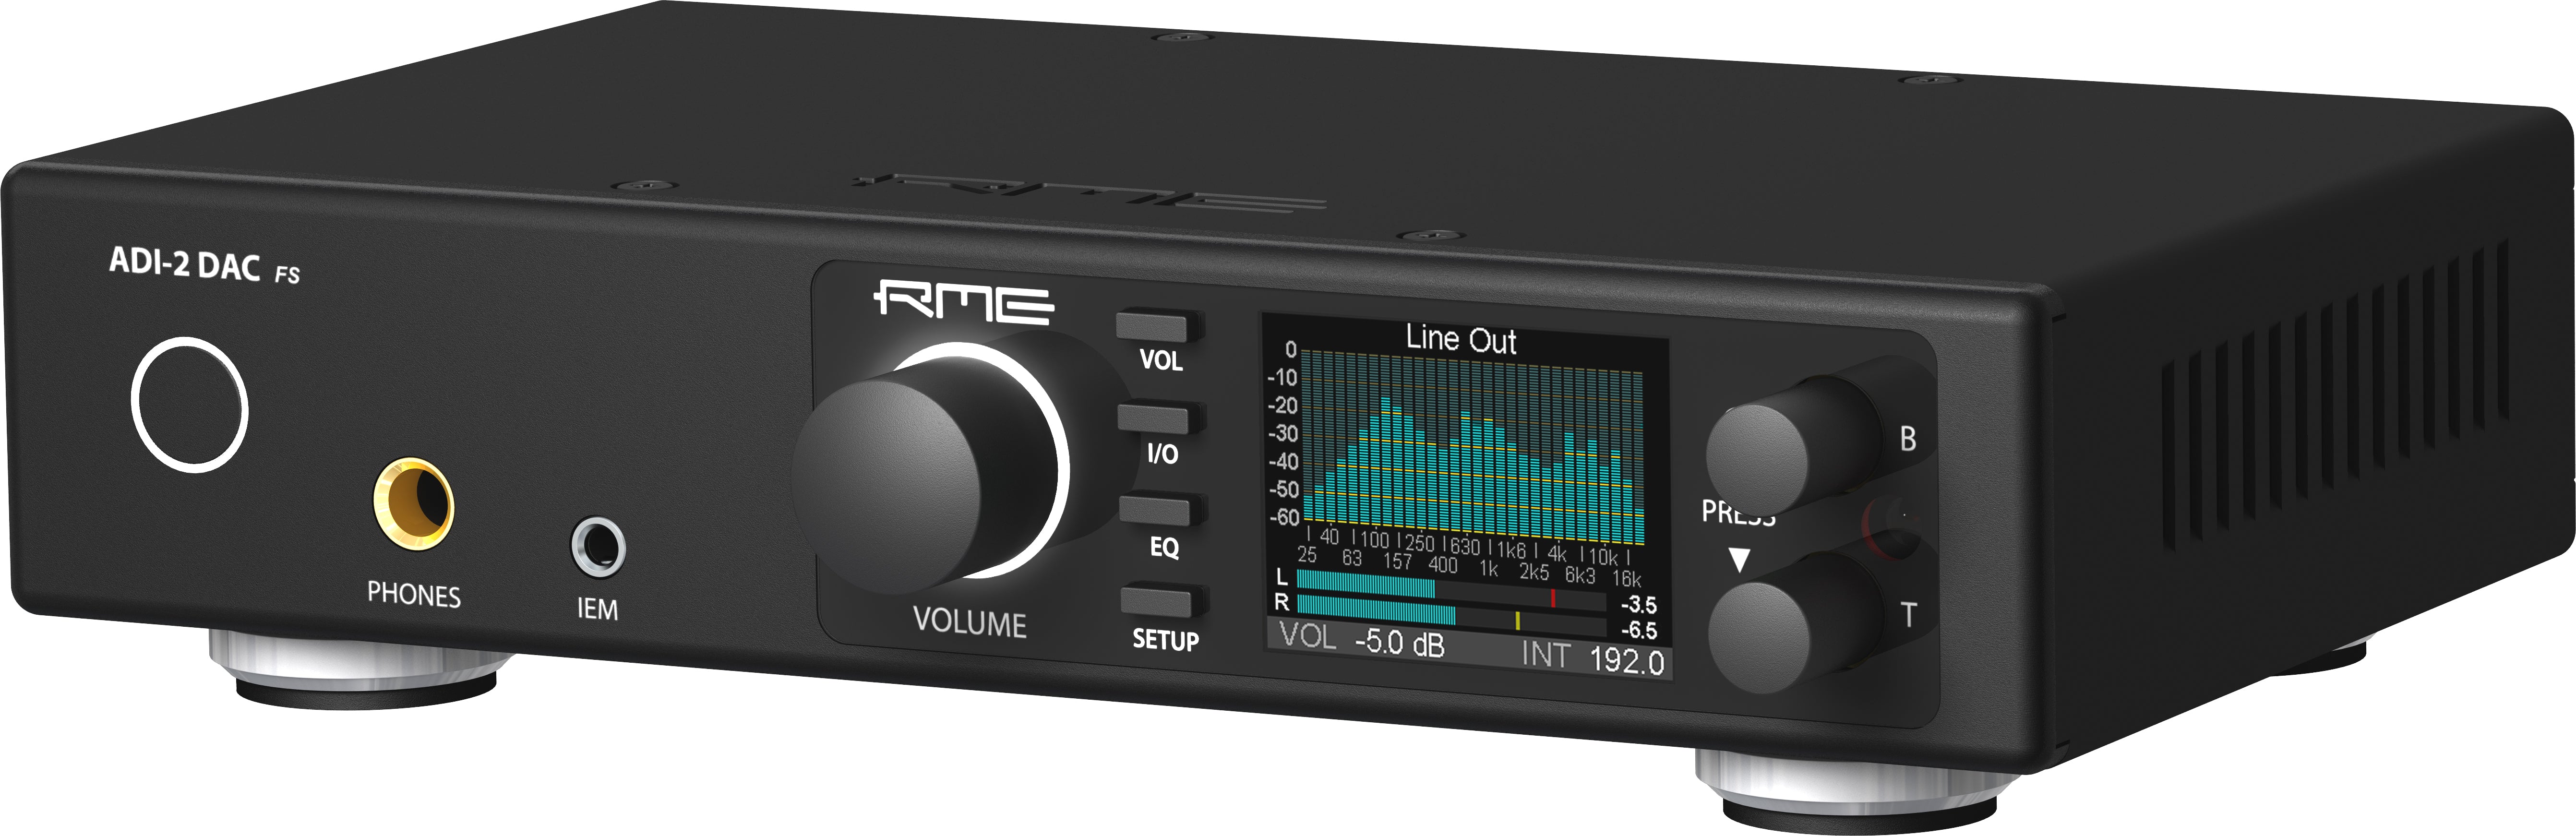 RME ADI-2 DAC FS - Converters - Professional Audio Design, Inc